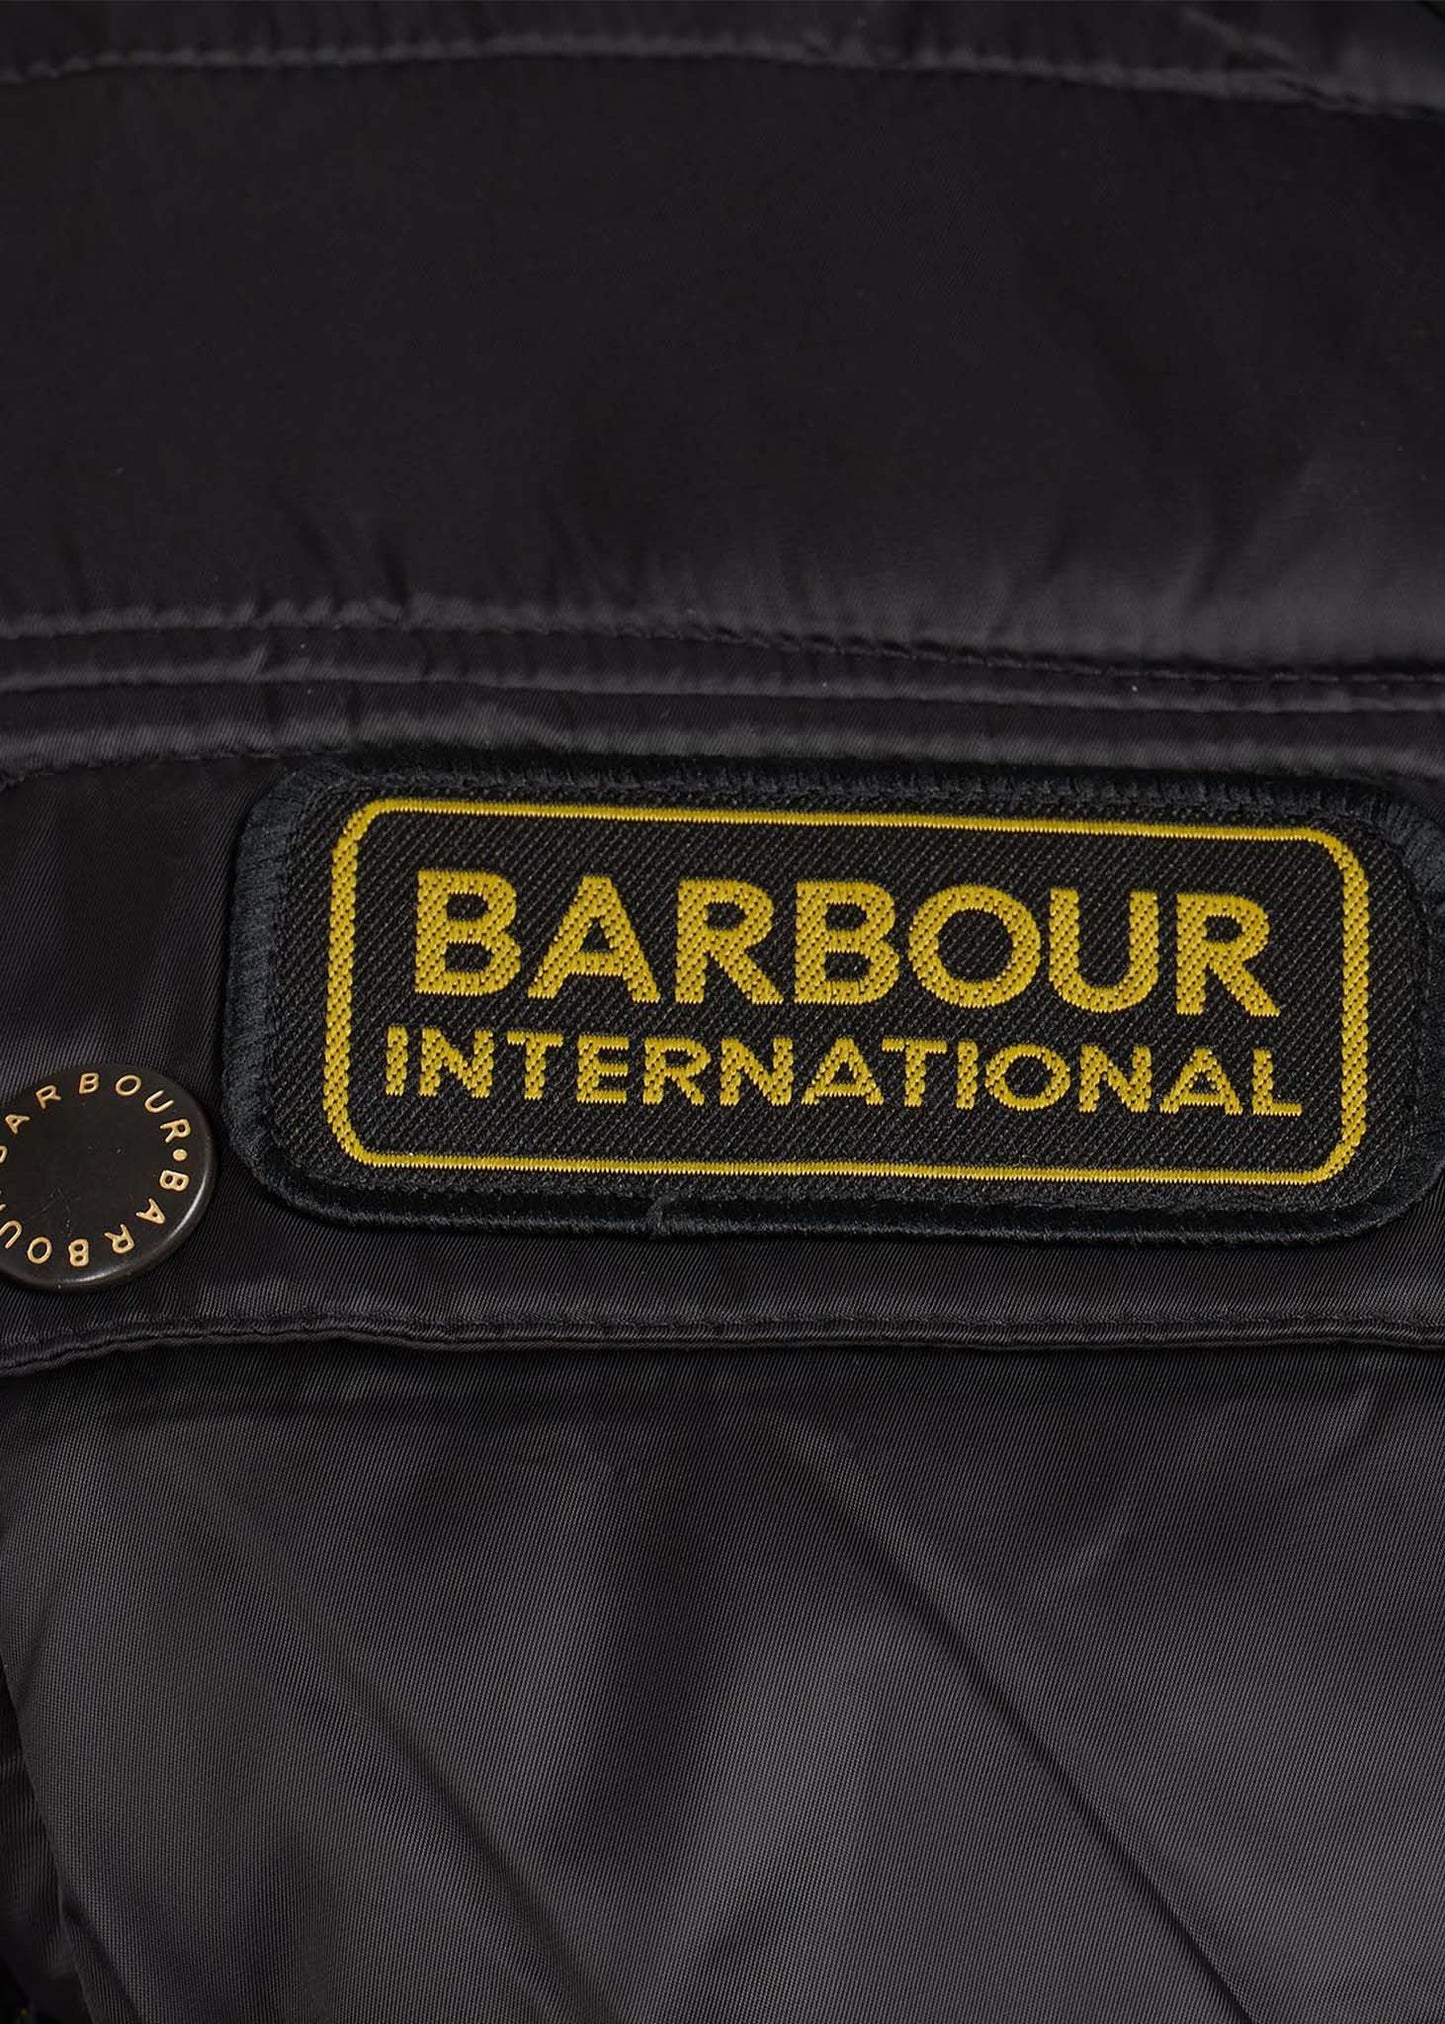 Barbour International Jassen  Chain baffle quilt - black 